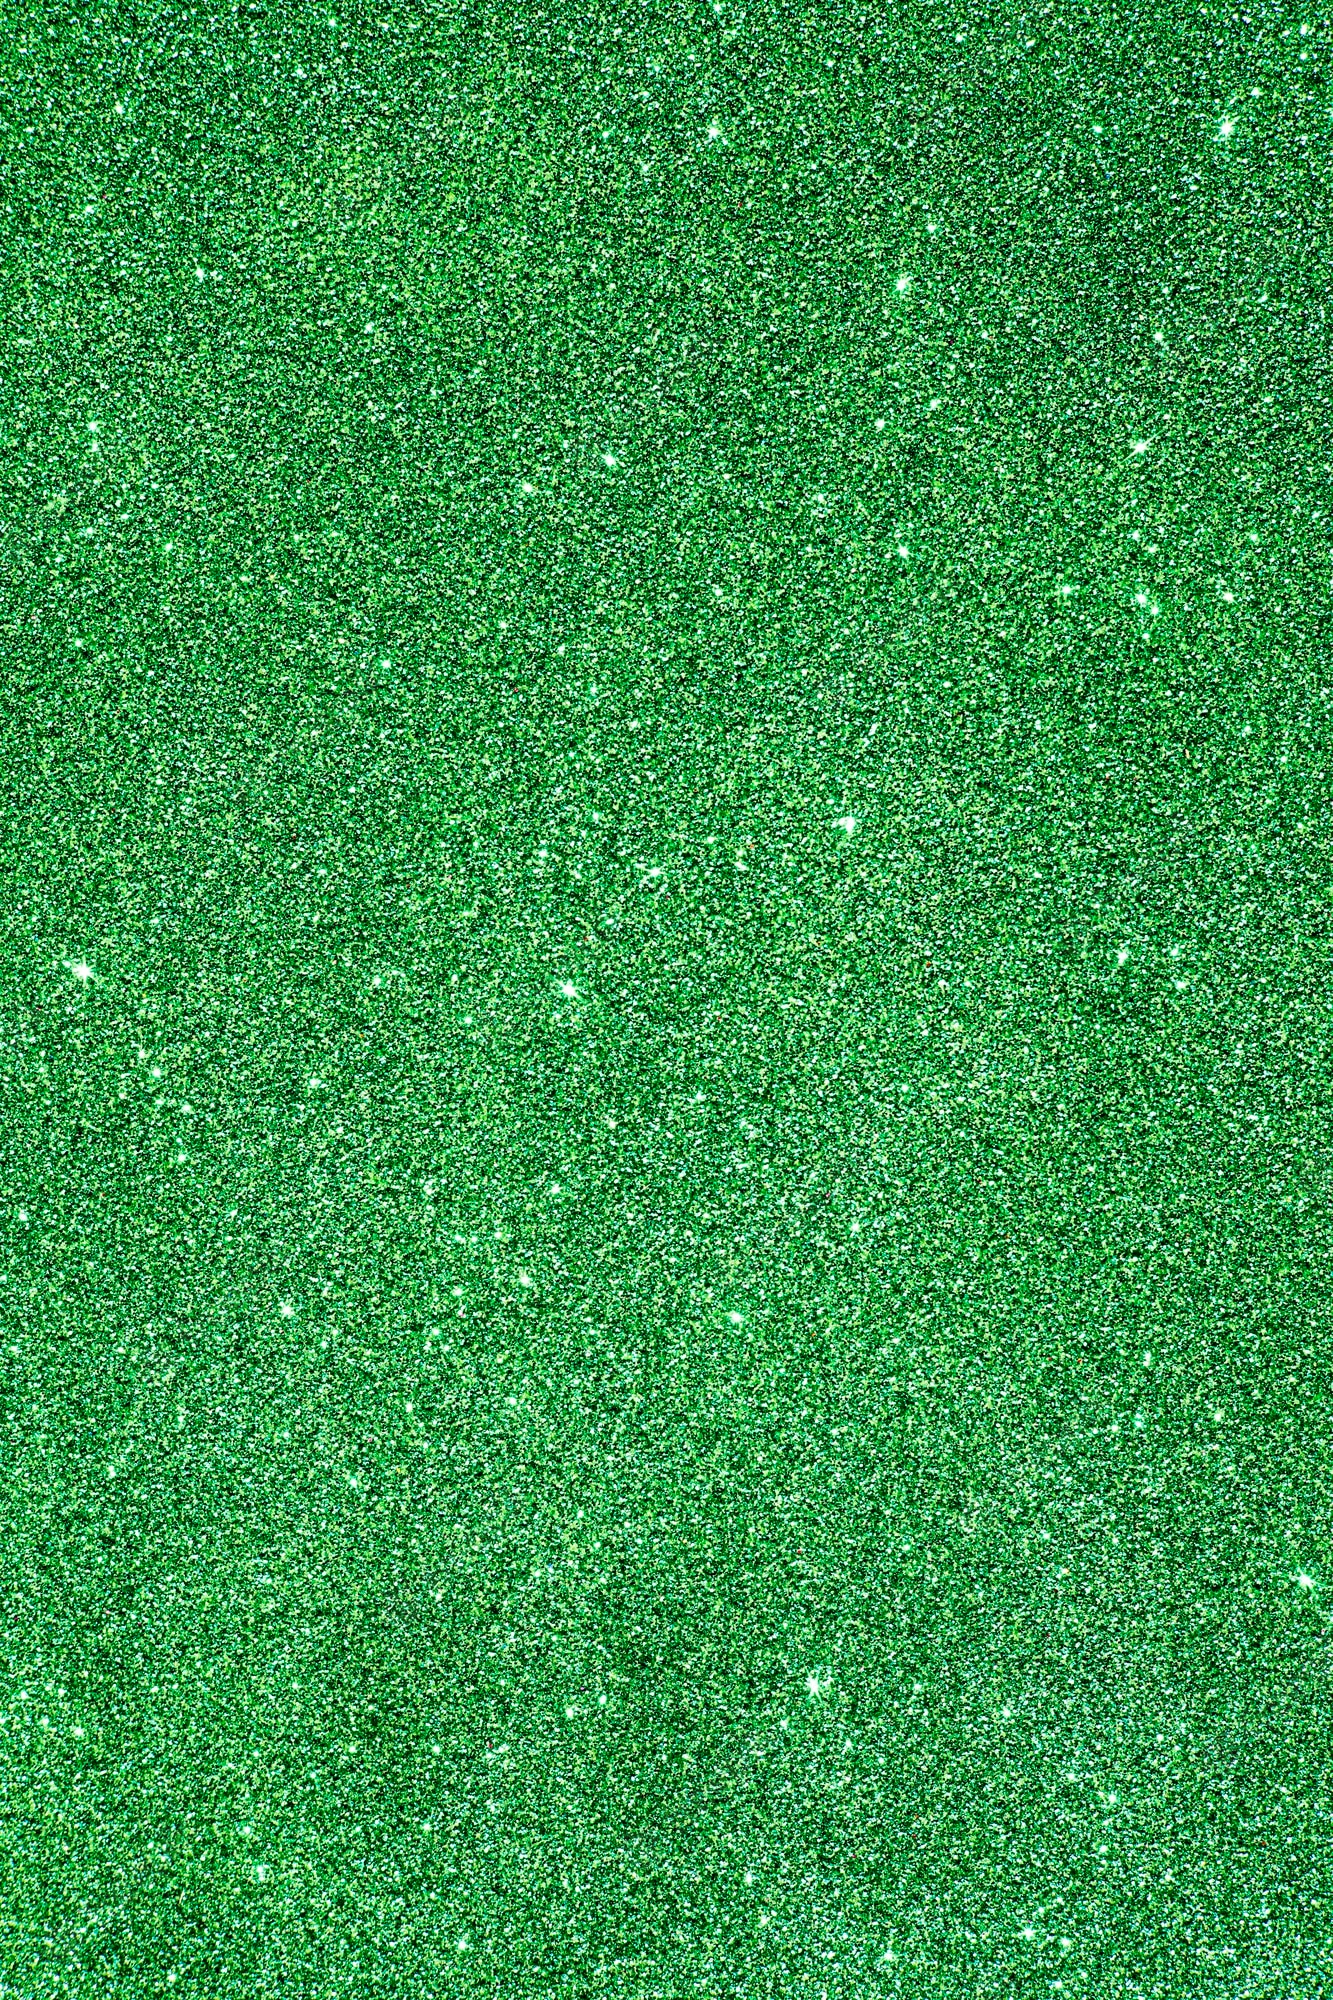 Green glitter Image. Free Vectors, & PSD